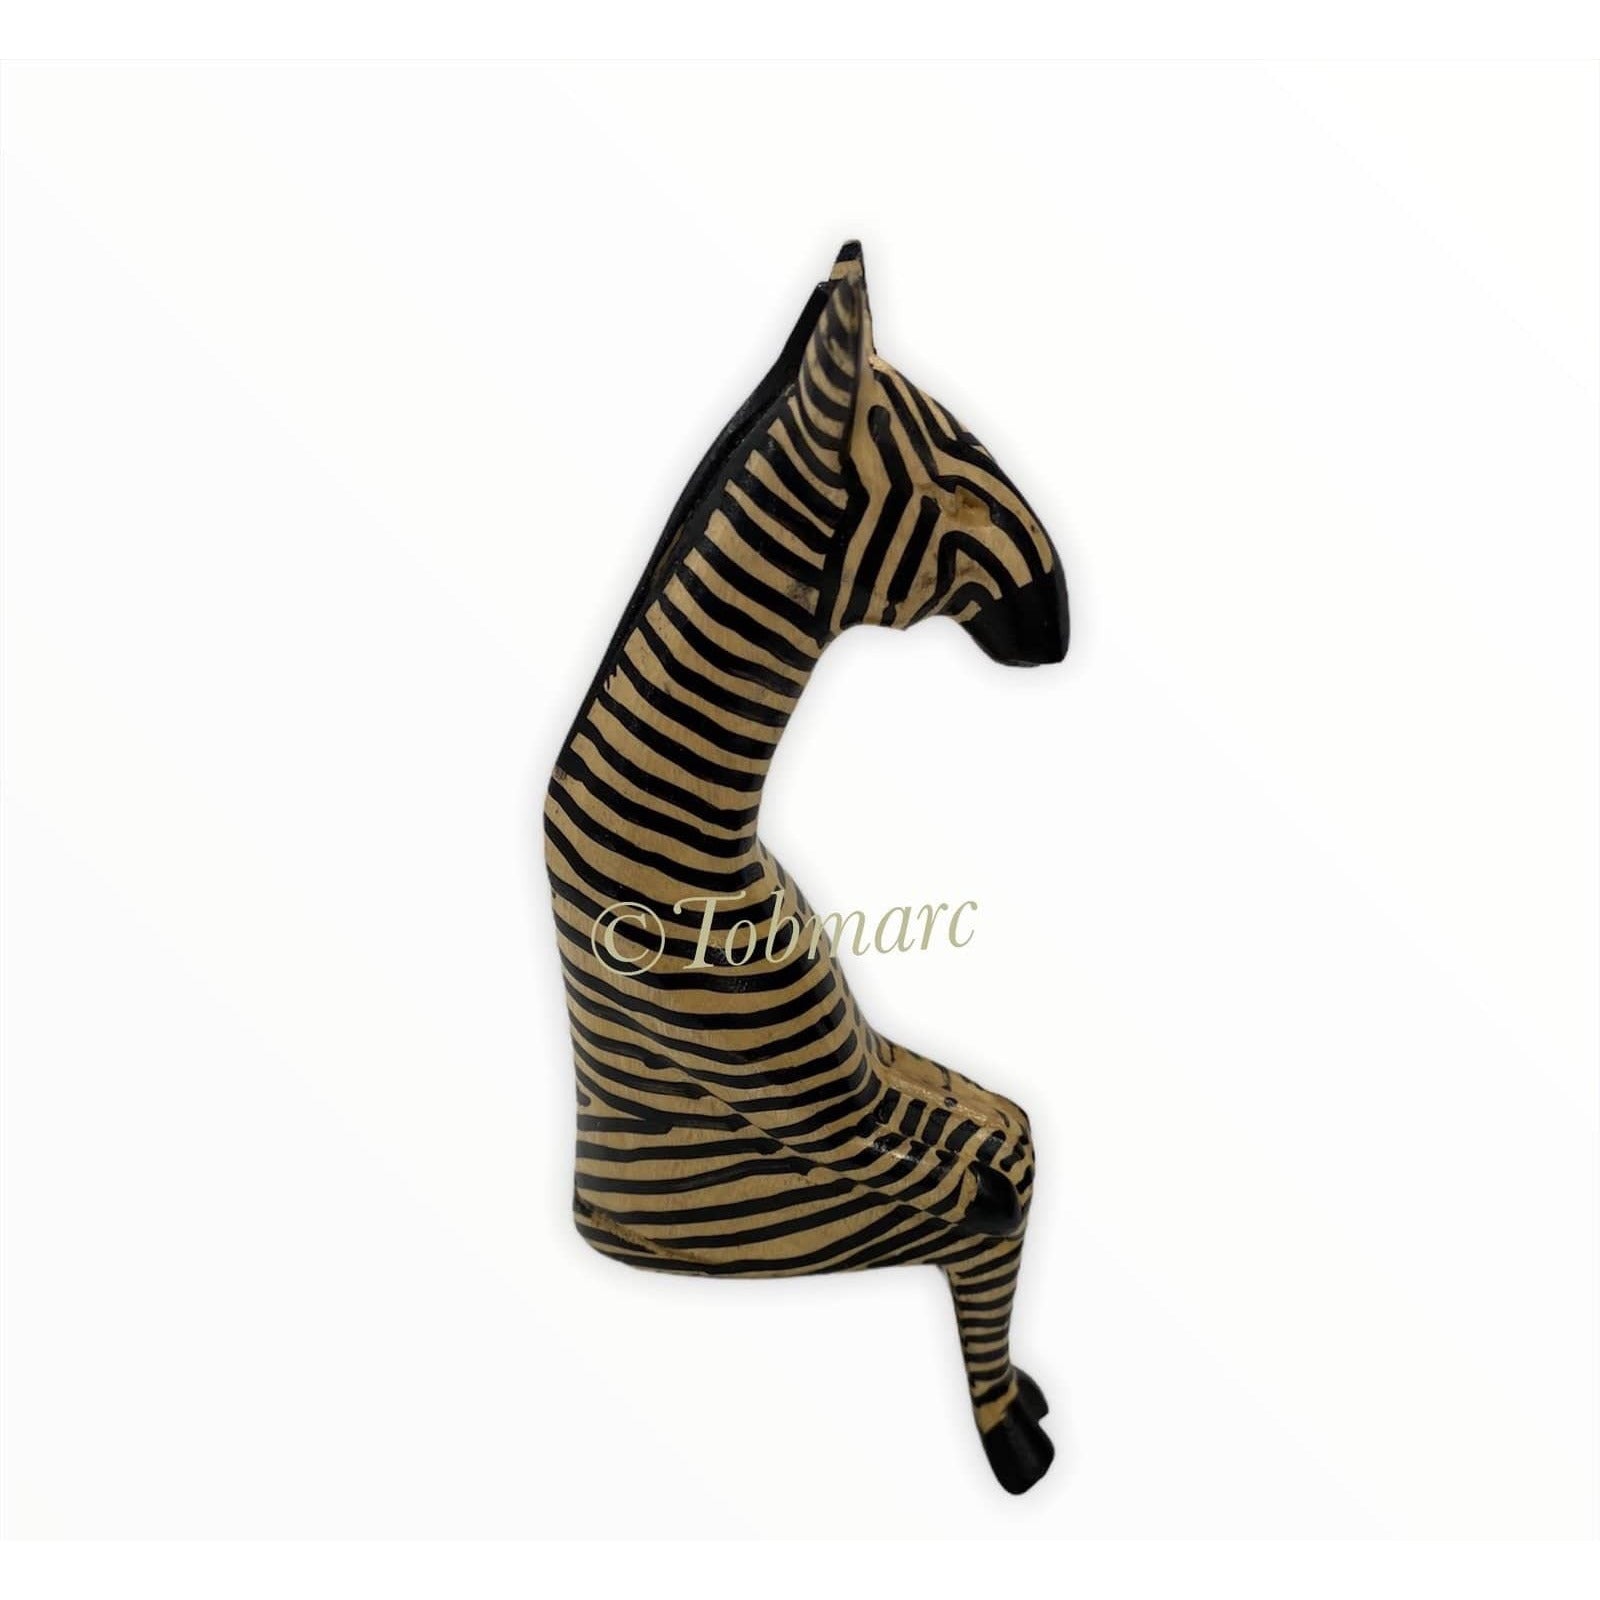 Tobmarc Home Decor & Gifts  Sculpture & Carvings Zebra / 8" African Sitting Animal, Wooden Zebra, Giraffe Home Decor, Decoration for Book Shelf